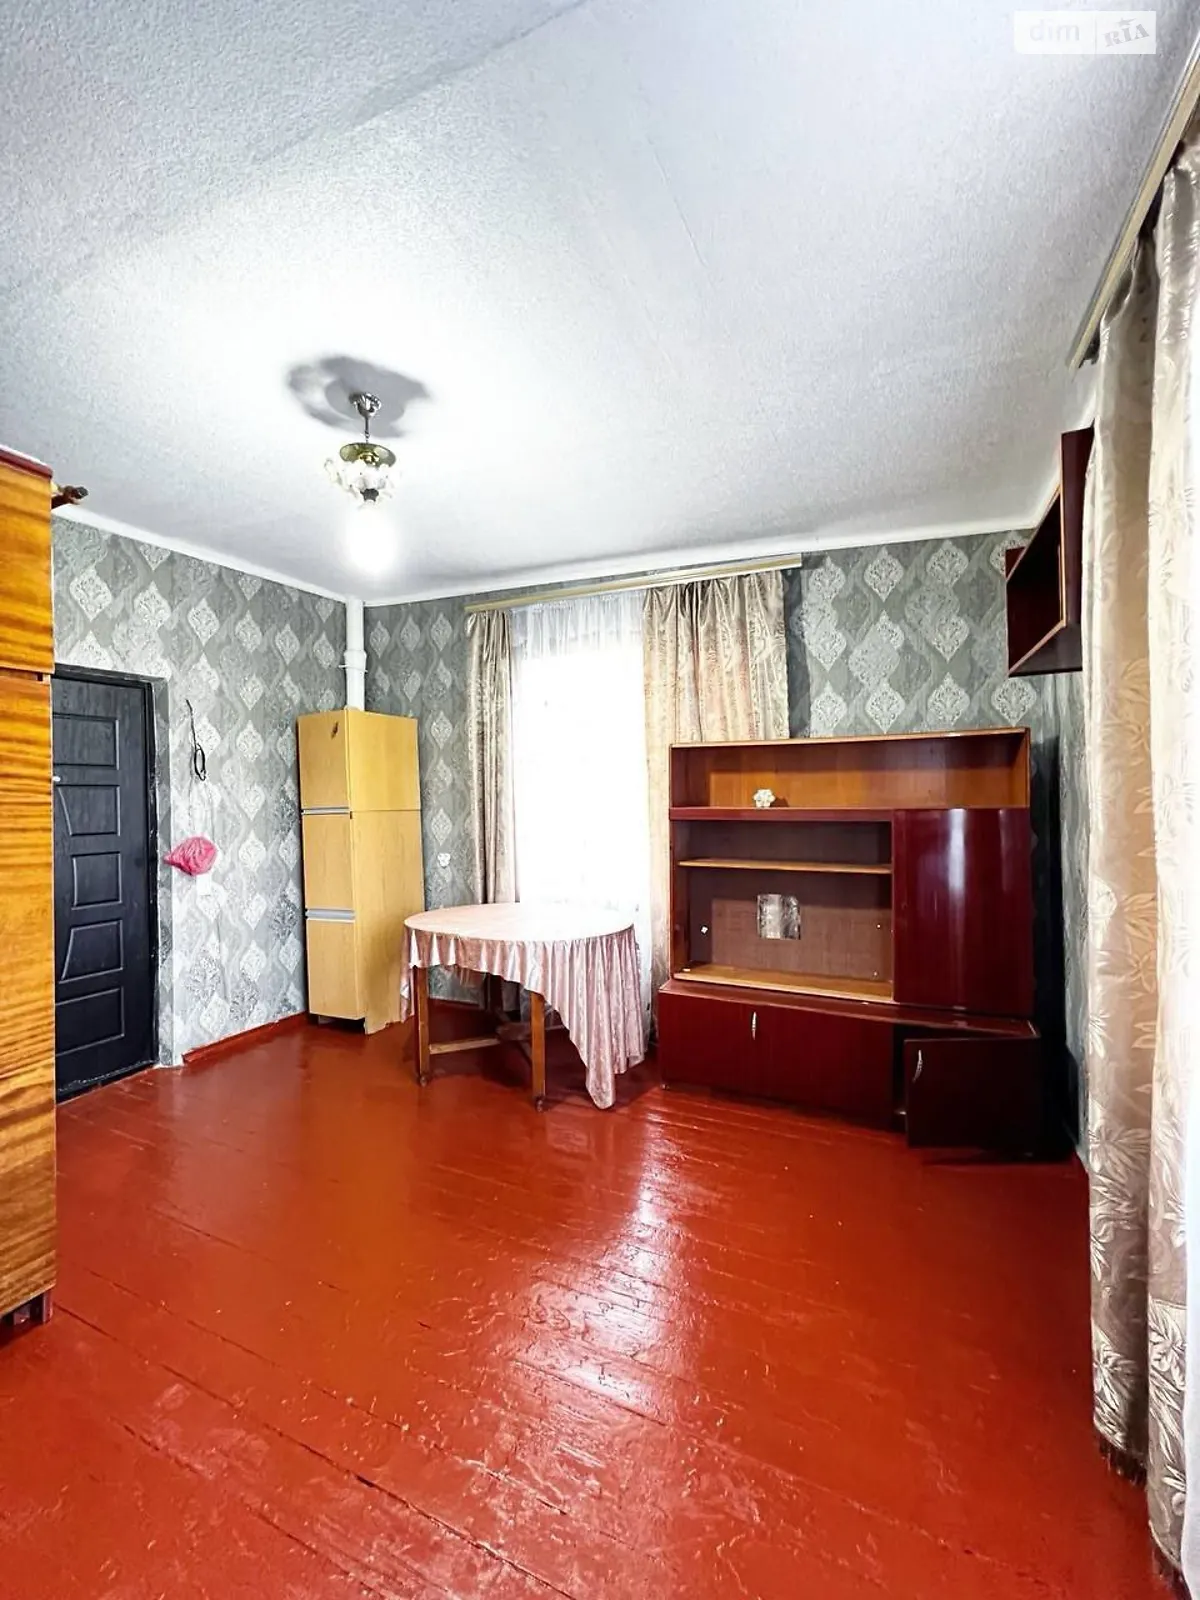 Продается комната 15.4 кв. м в Сумах, цена: 4800 $